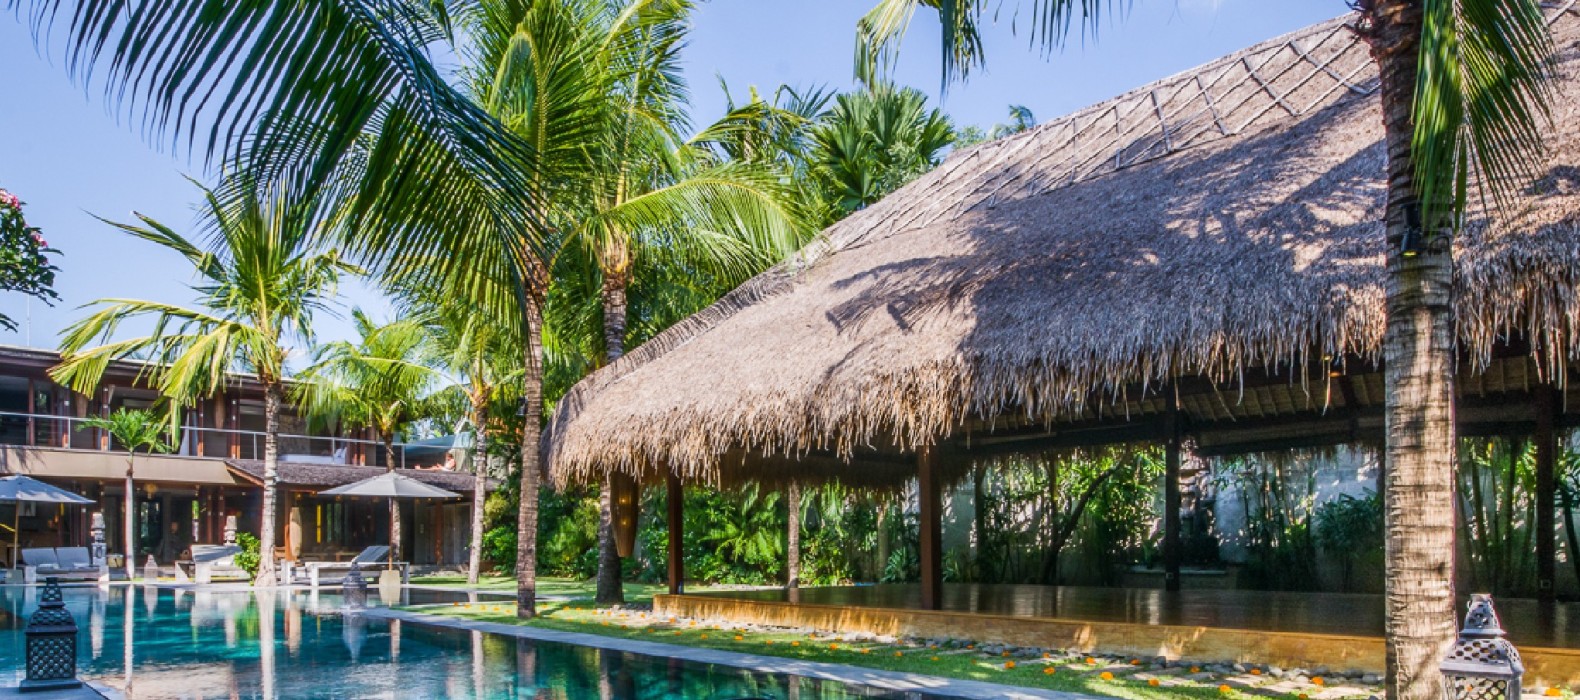 Exterior pool of Villa Yoga in Bali